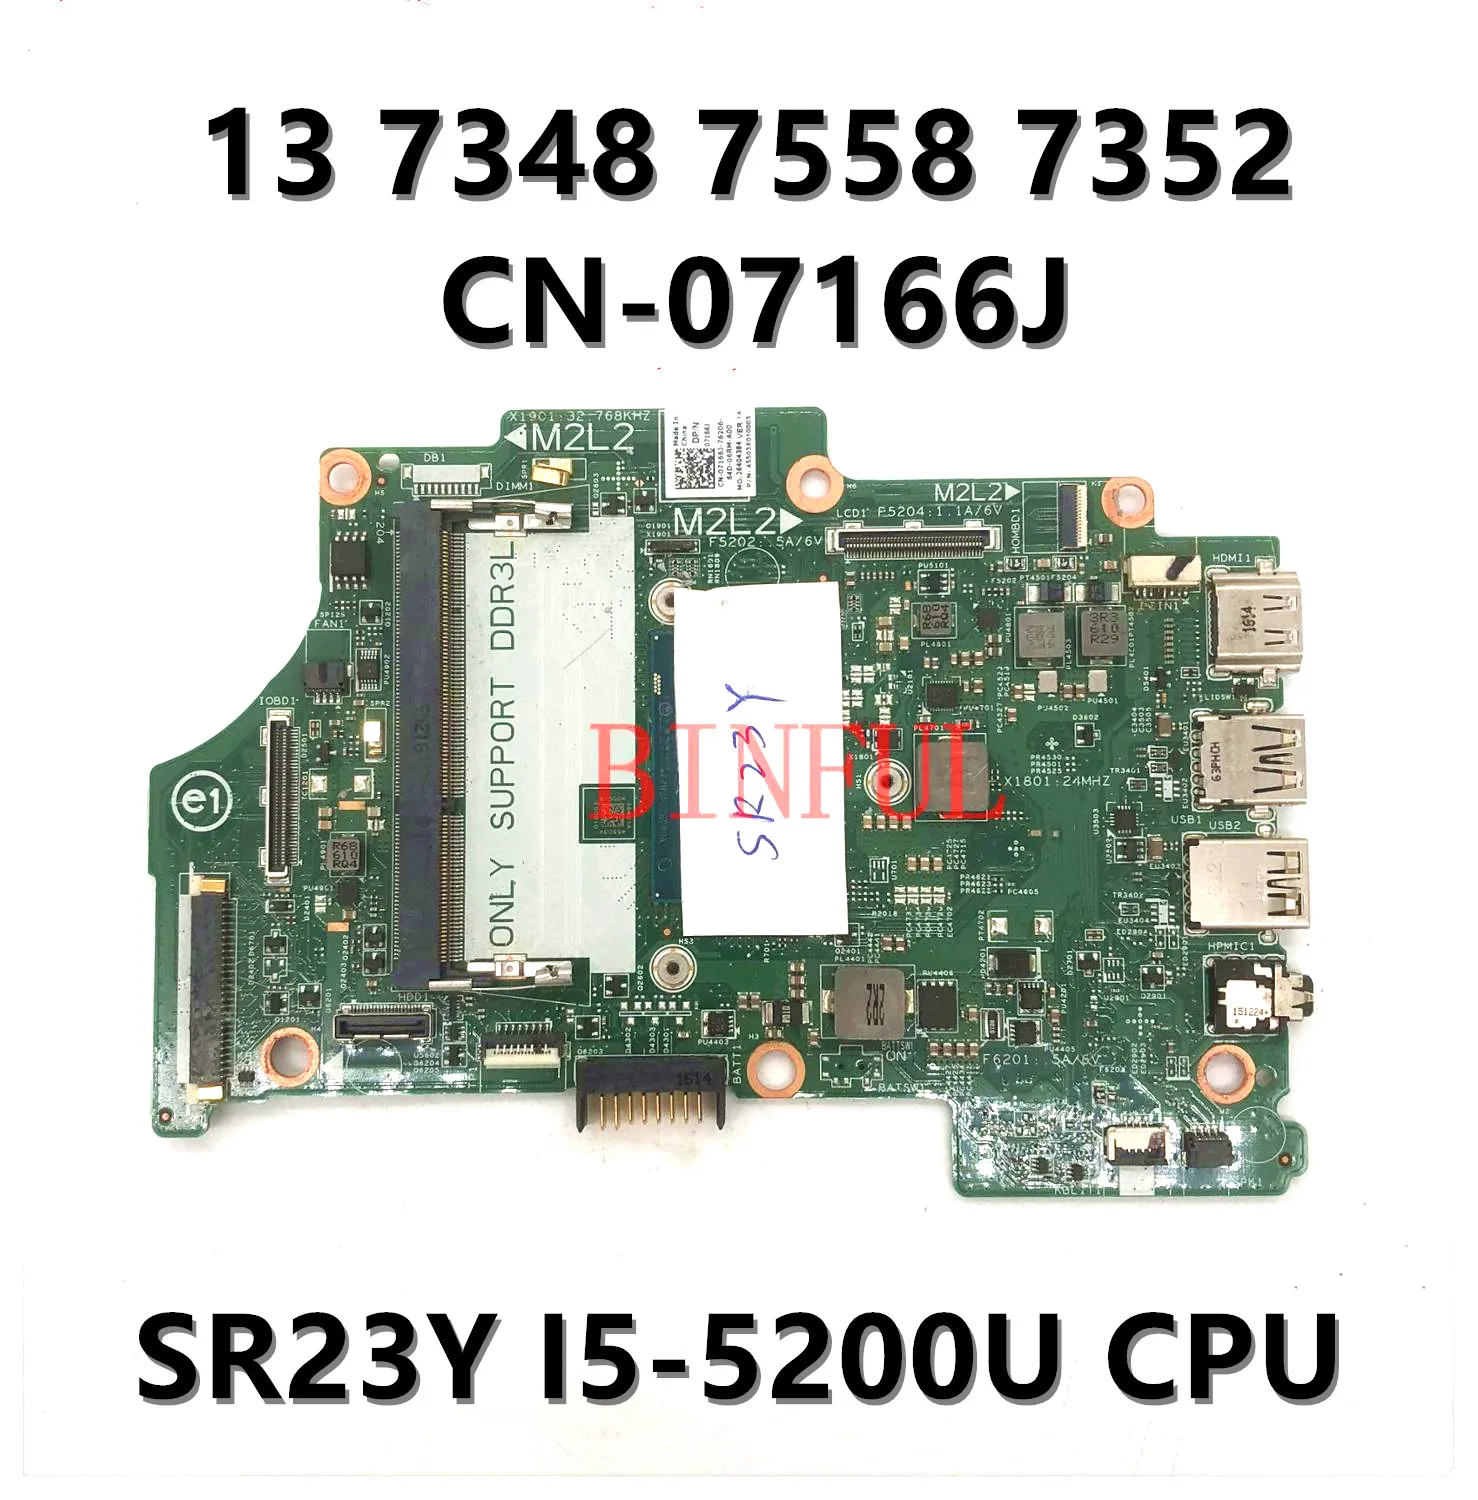 7166J 07166J CN-07166J For Dell Inspiron 13 7348 7558 7352 Laptop Motherboard 13321-1 With SR23Y I5-5200U CPU 100%Full Tested OK